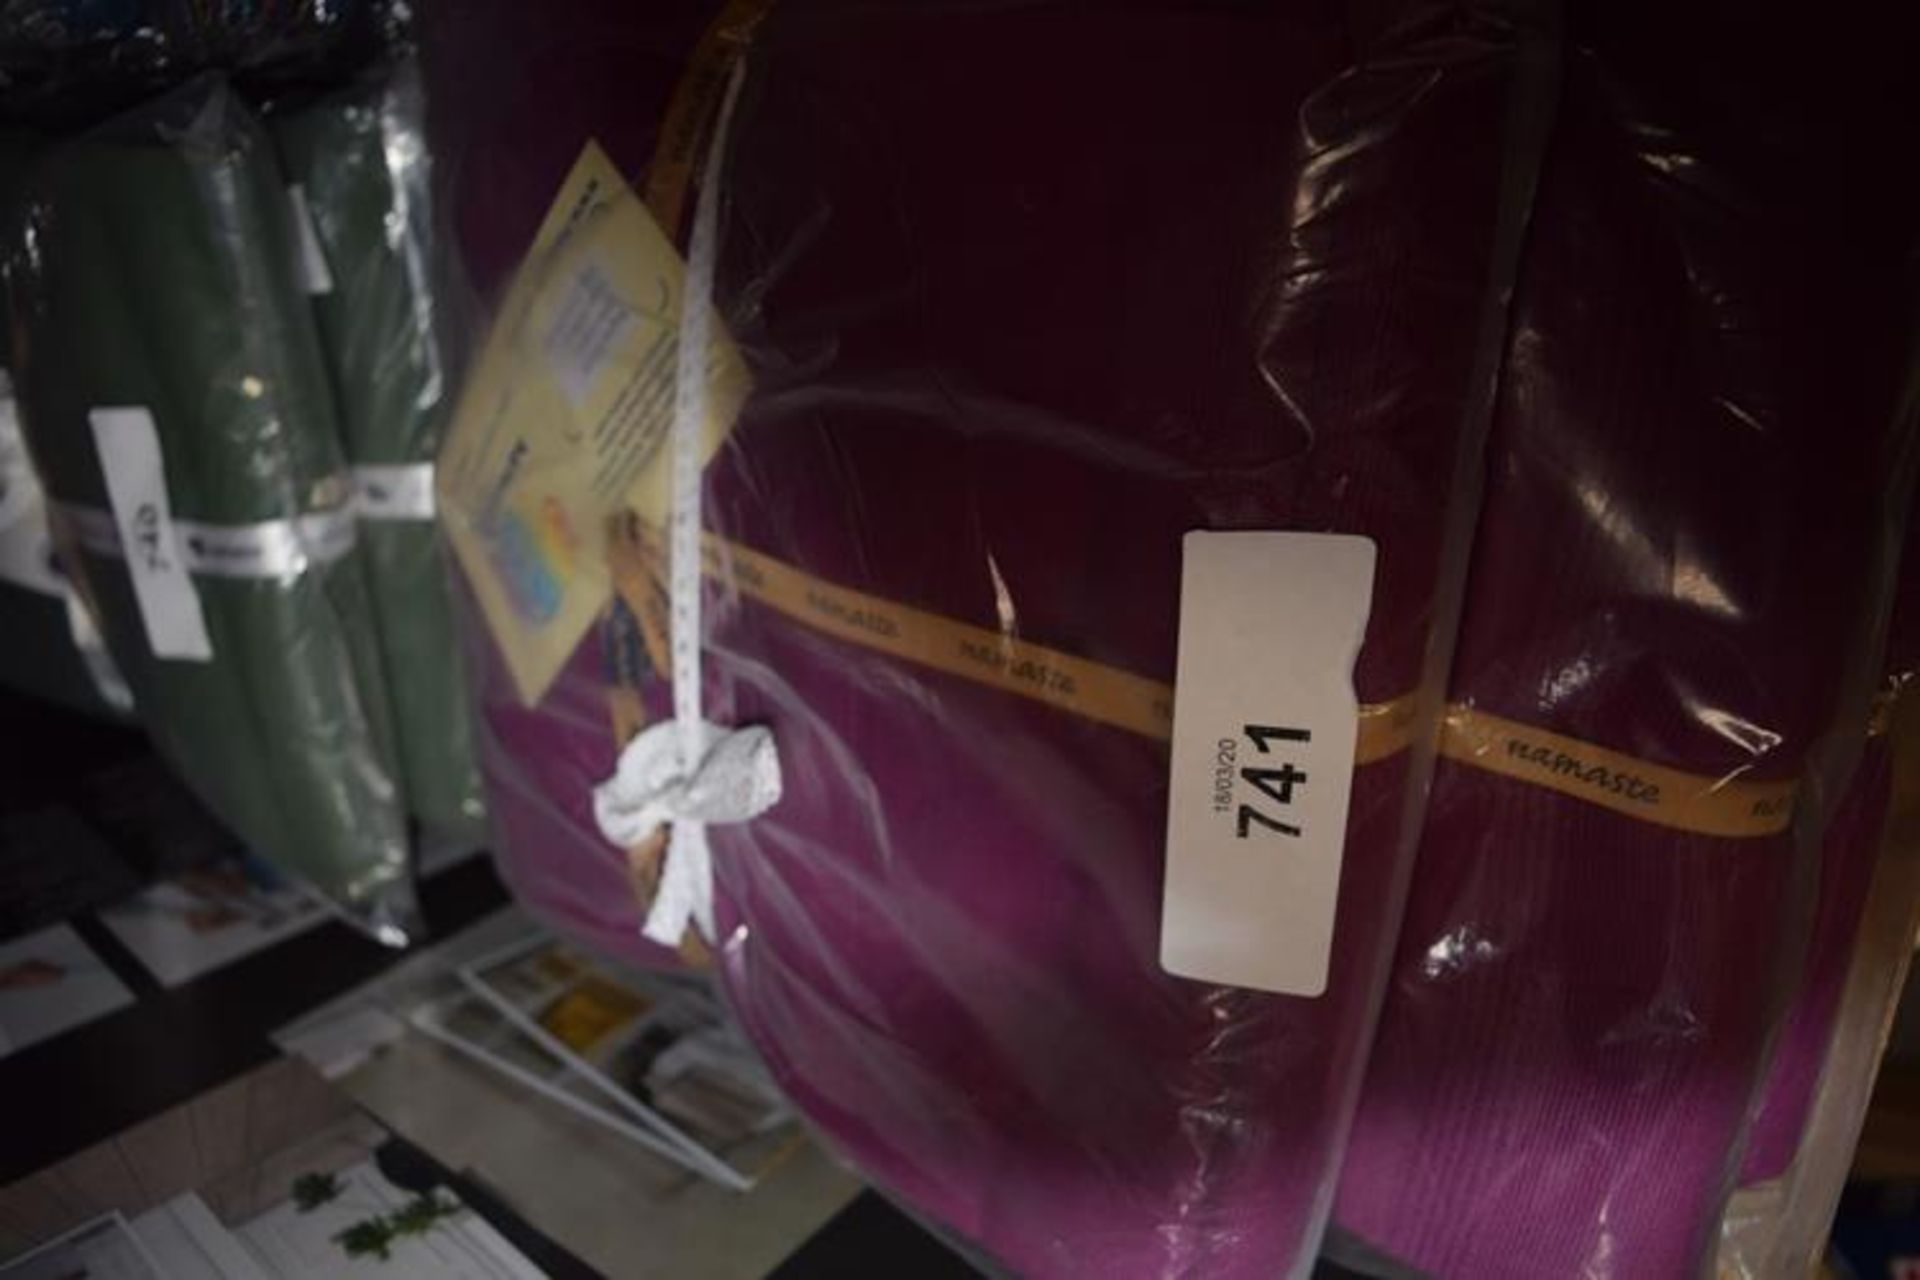 3 x Namaste Home Rajput double cotton throws, colour purple, code RDRAS, size 225 x 250cm - New in